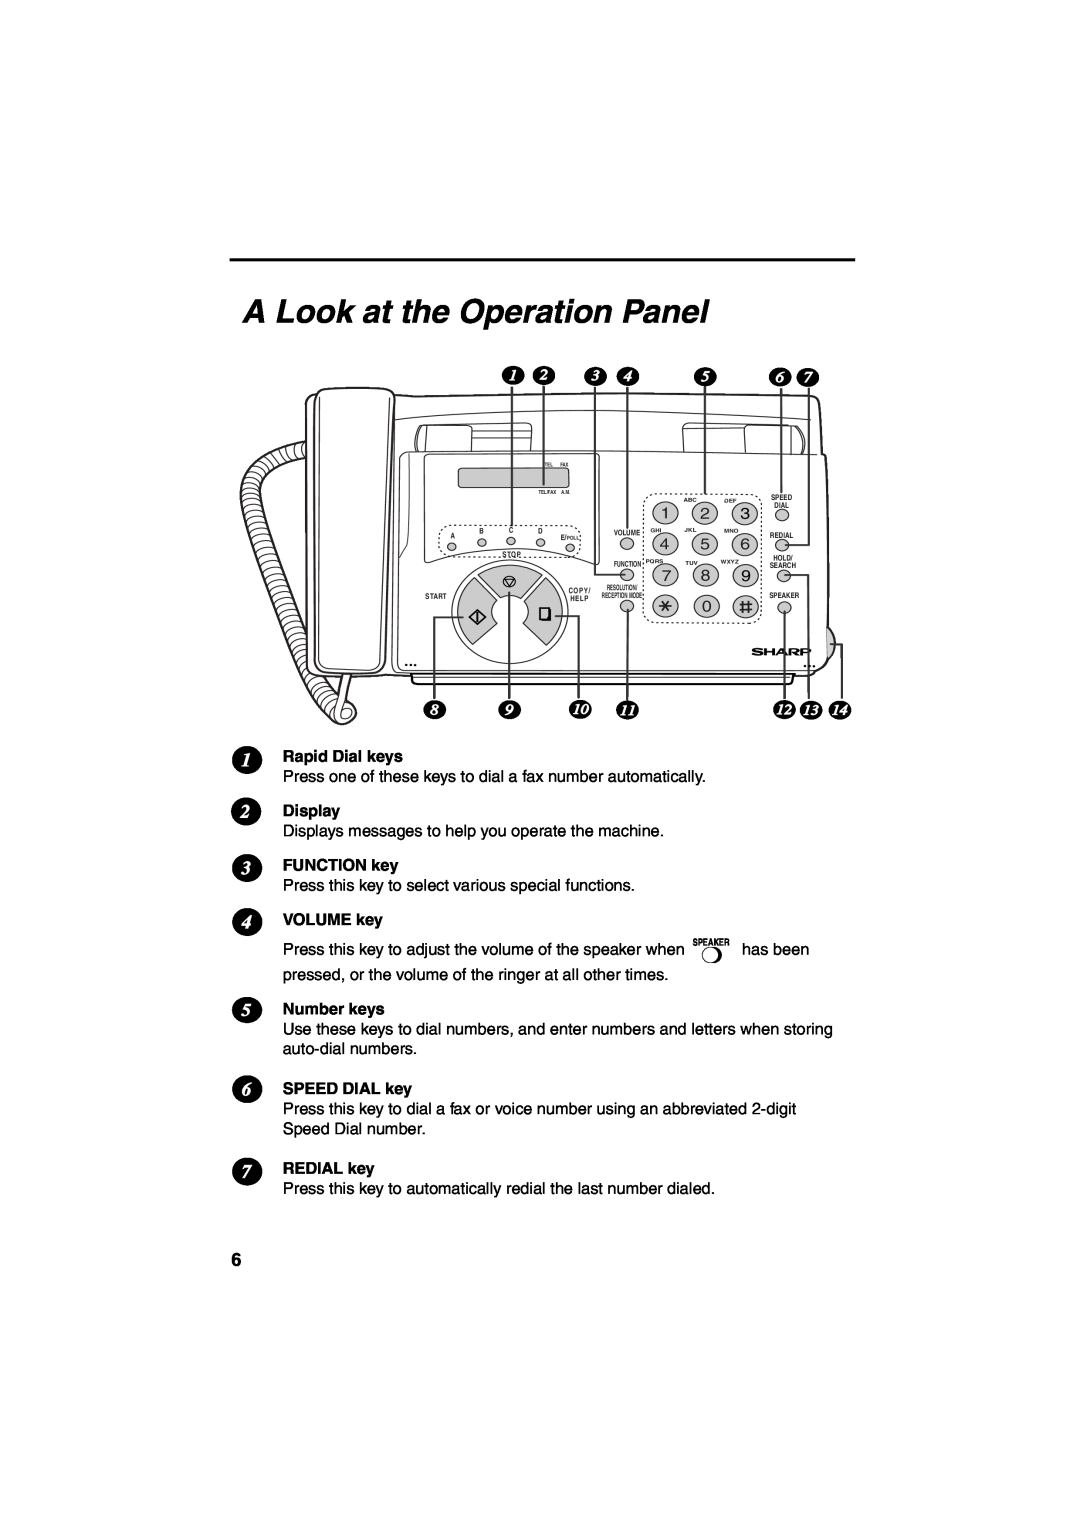 Sharp UX-41 A Look at the Operation Panel, Rapid Dial keys, Display, FUNCTION key, VOLUME key, Number keys, SPEED DIAL key 